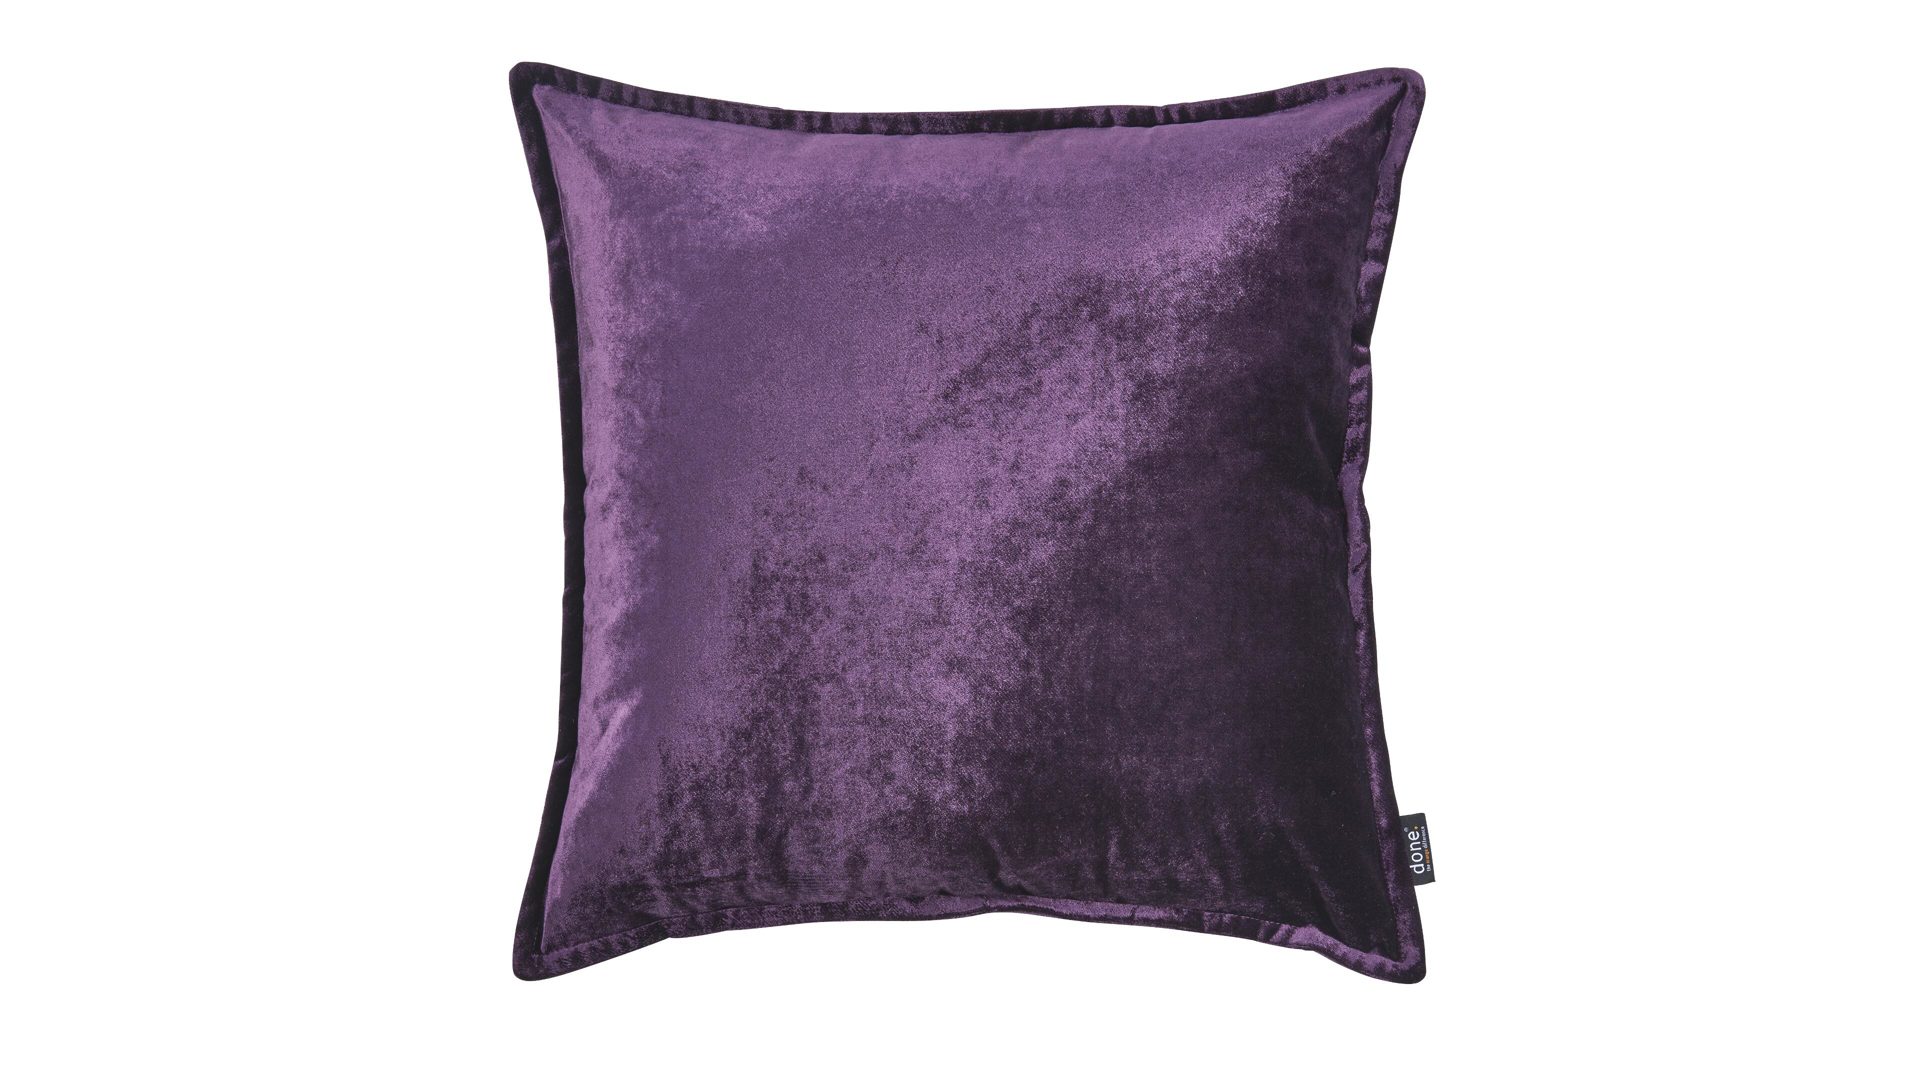 Kissenbezug /-hülle Done by karabel home company aus Stoff in Lila Done Kissenhülle Cushion Glam lilafarbener Samt – ca. 65 x 65 cm